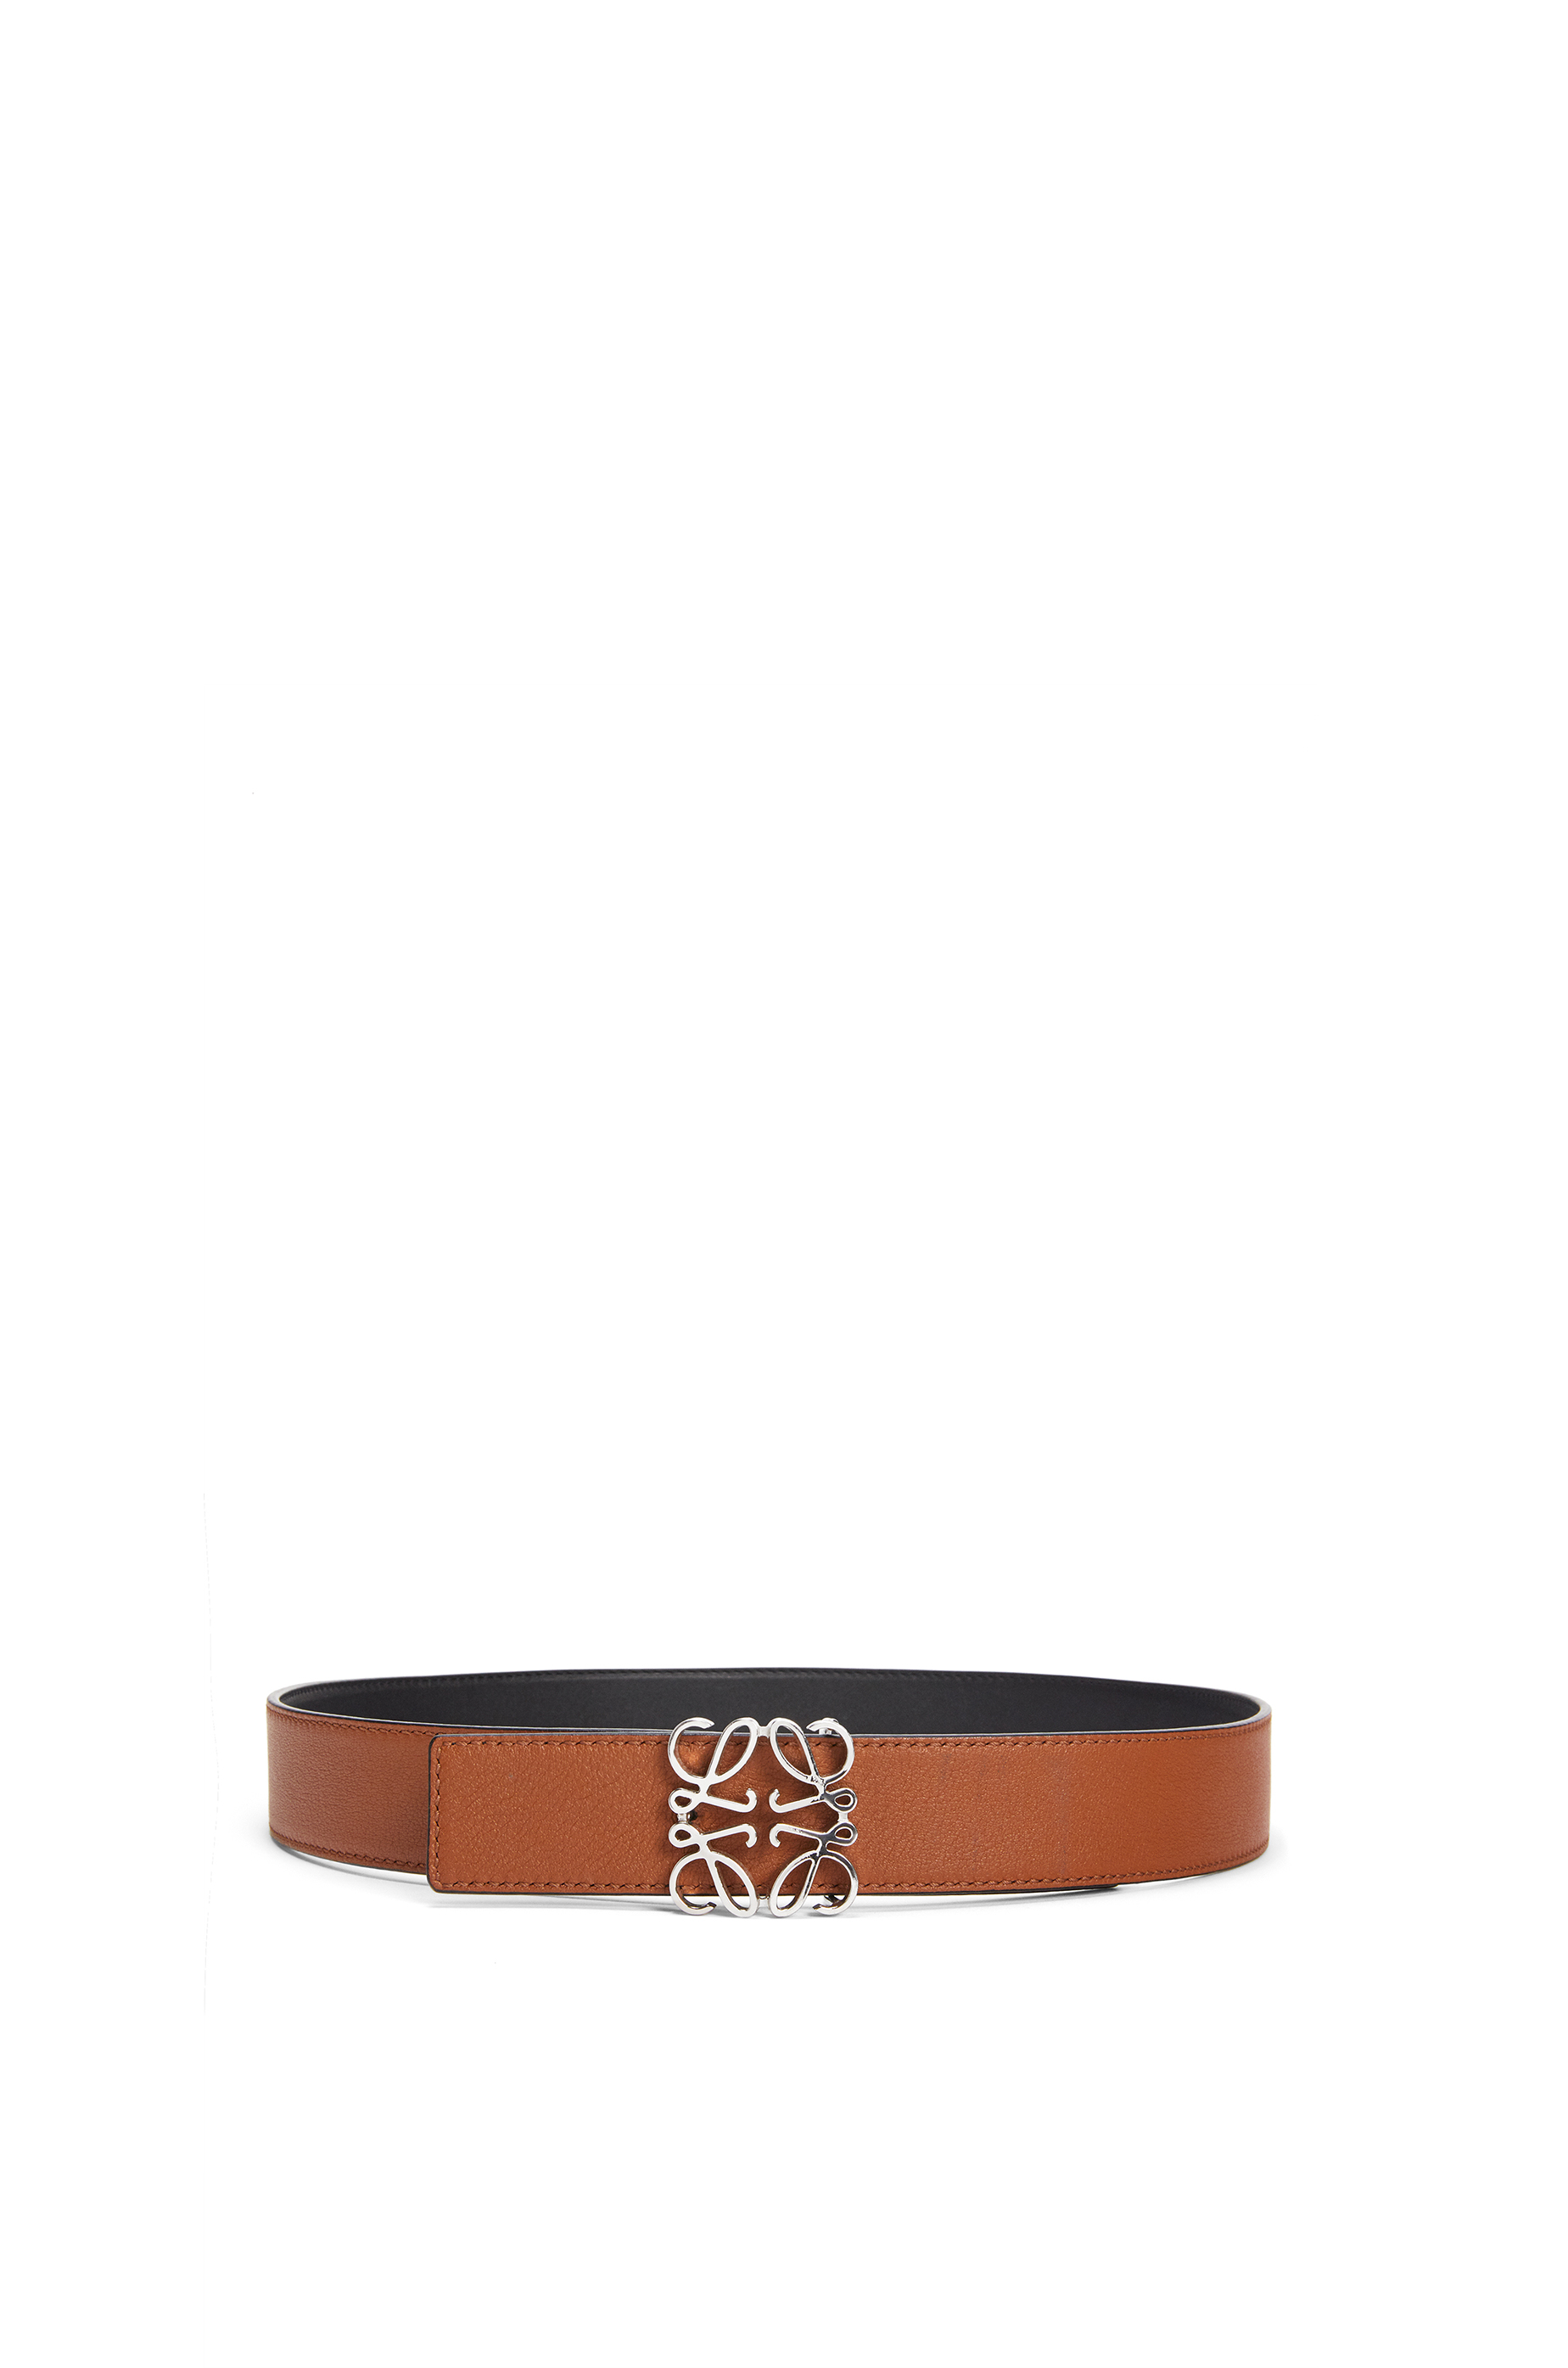 Luxury belts for men - LOEWE Official Site